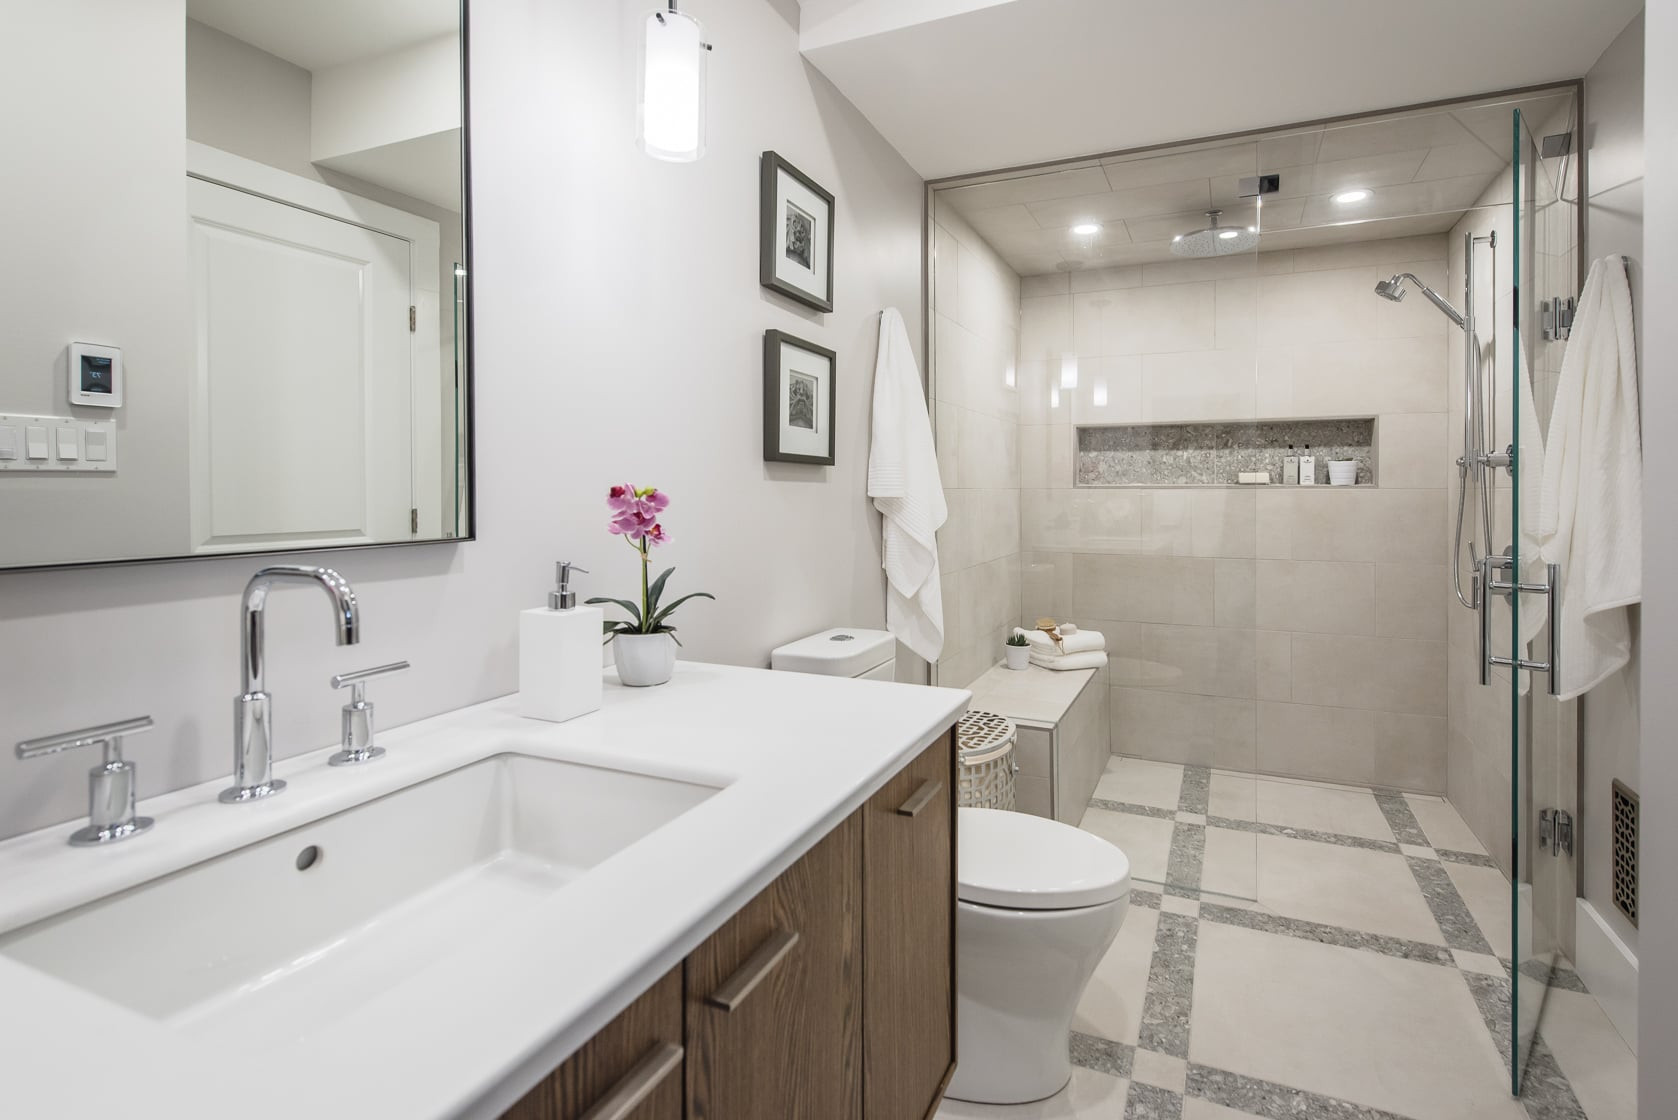 New Bathroom Designs
 Luxurious Bathroom Updates